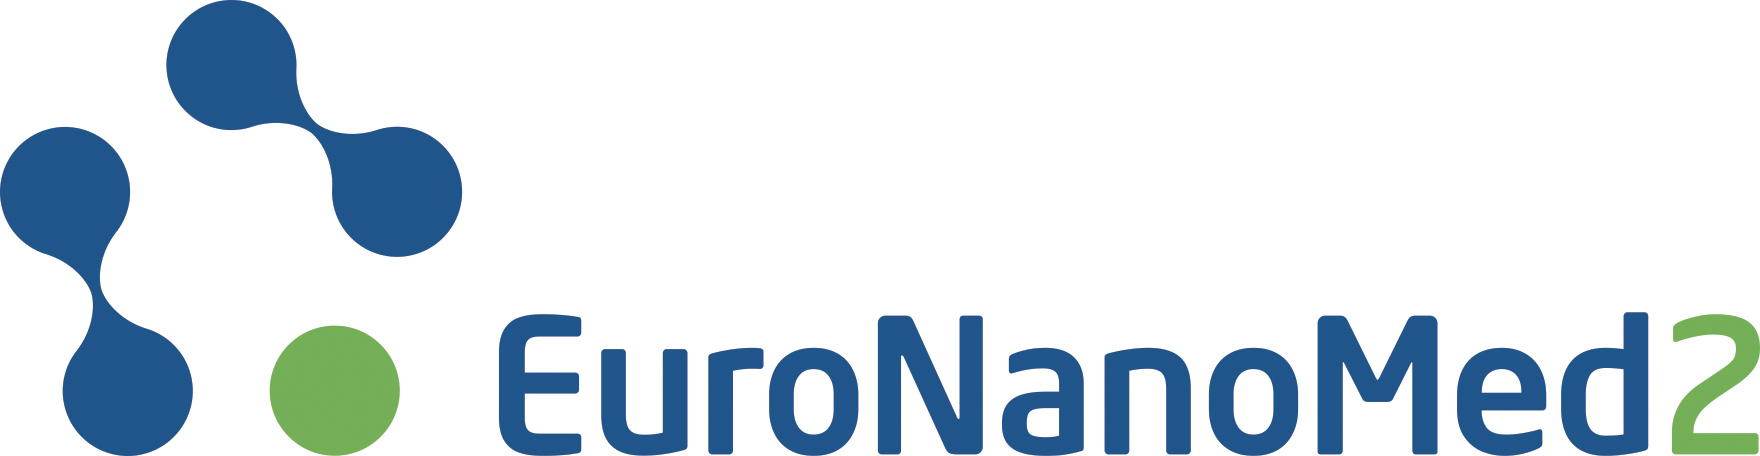 Logo Euronanomed 2